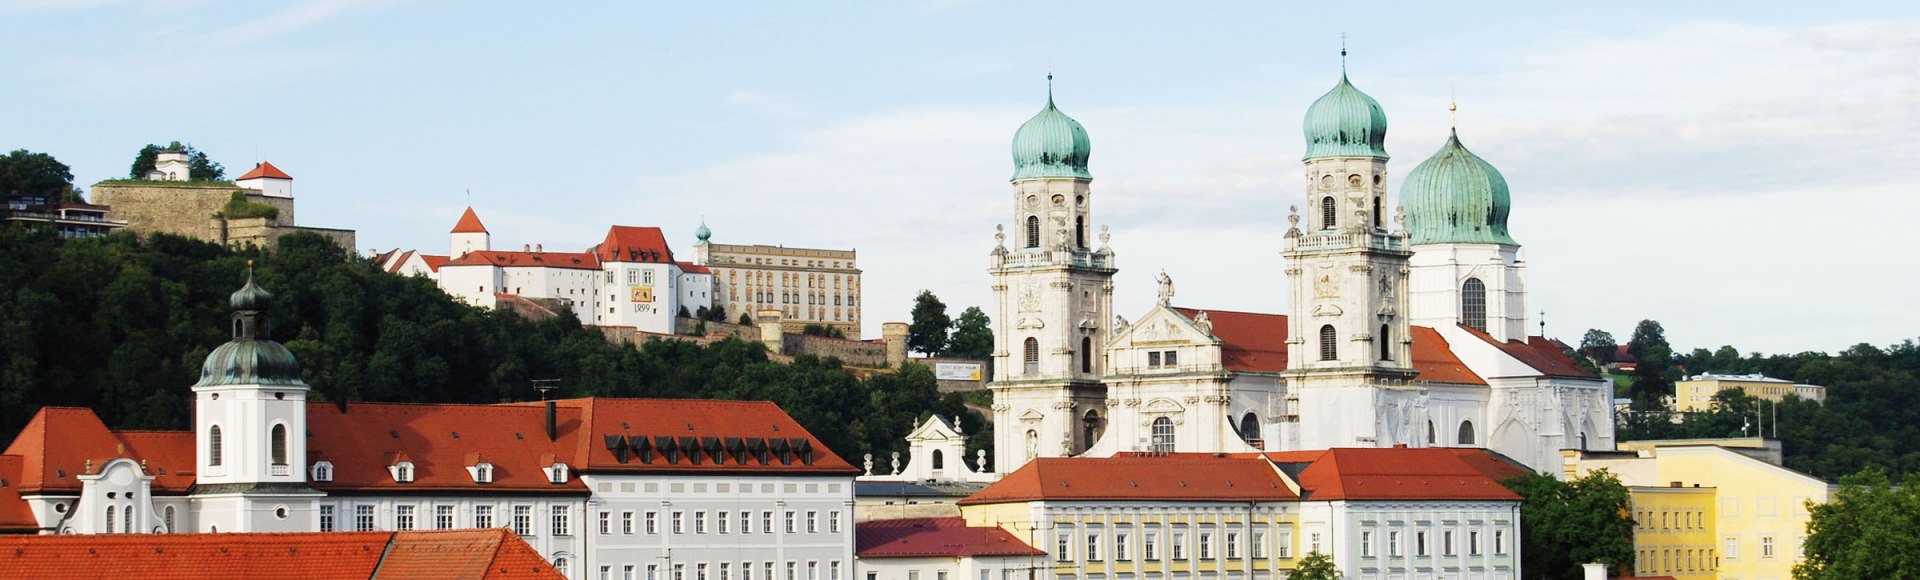 Stadt Passau, © © Hendrik Schwartz_Fotolia.com